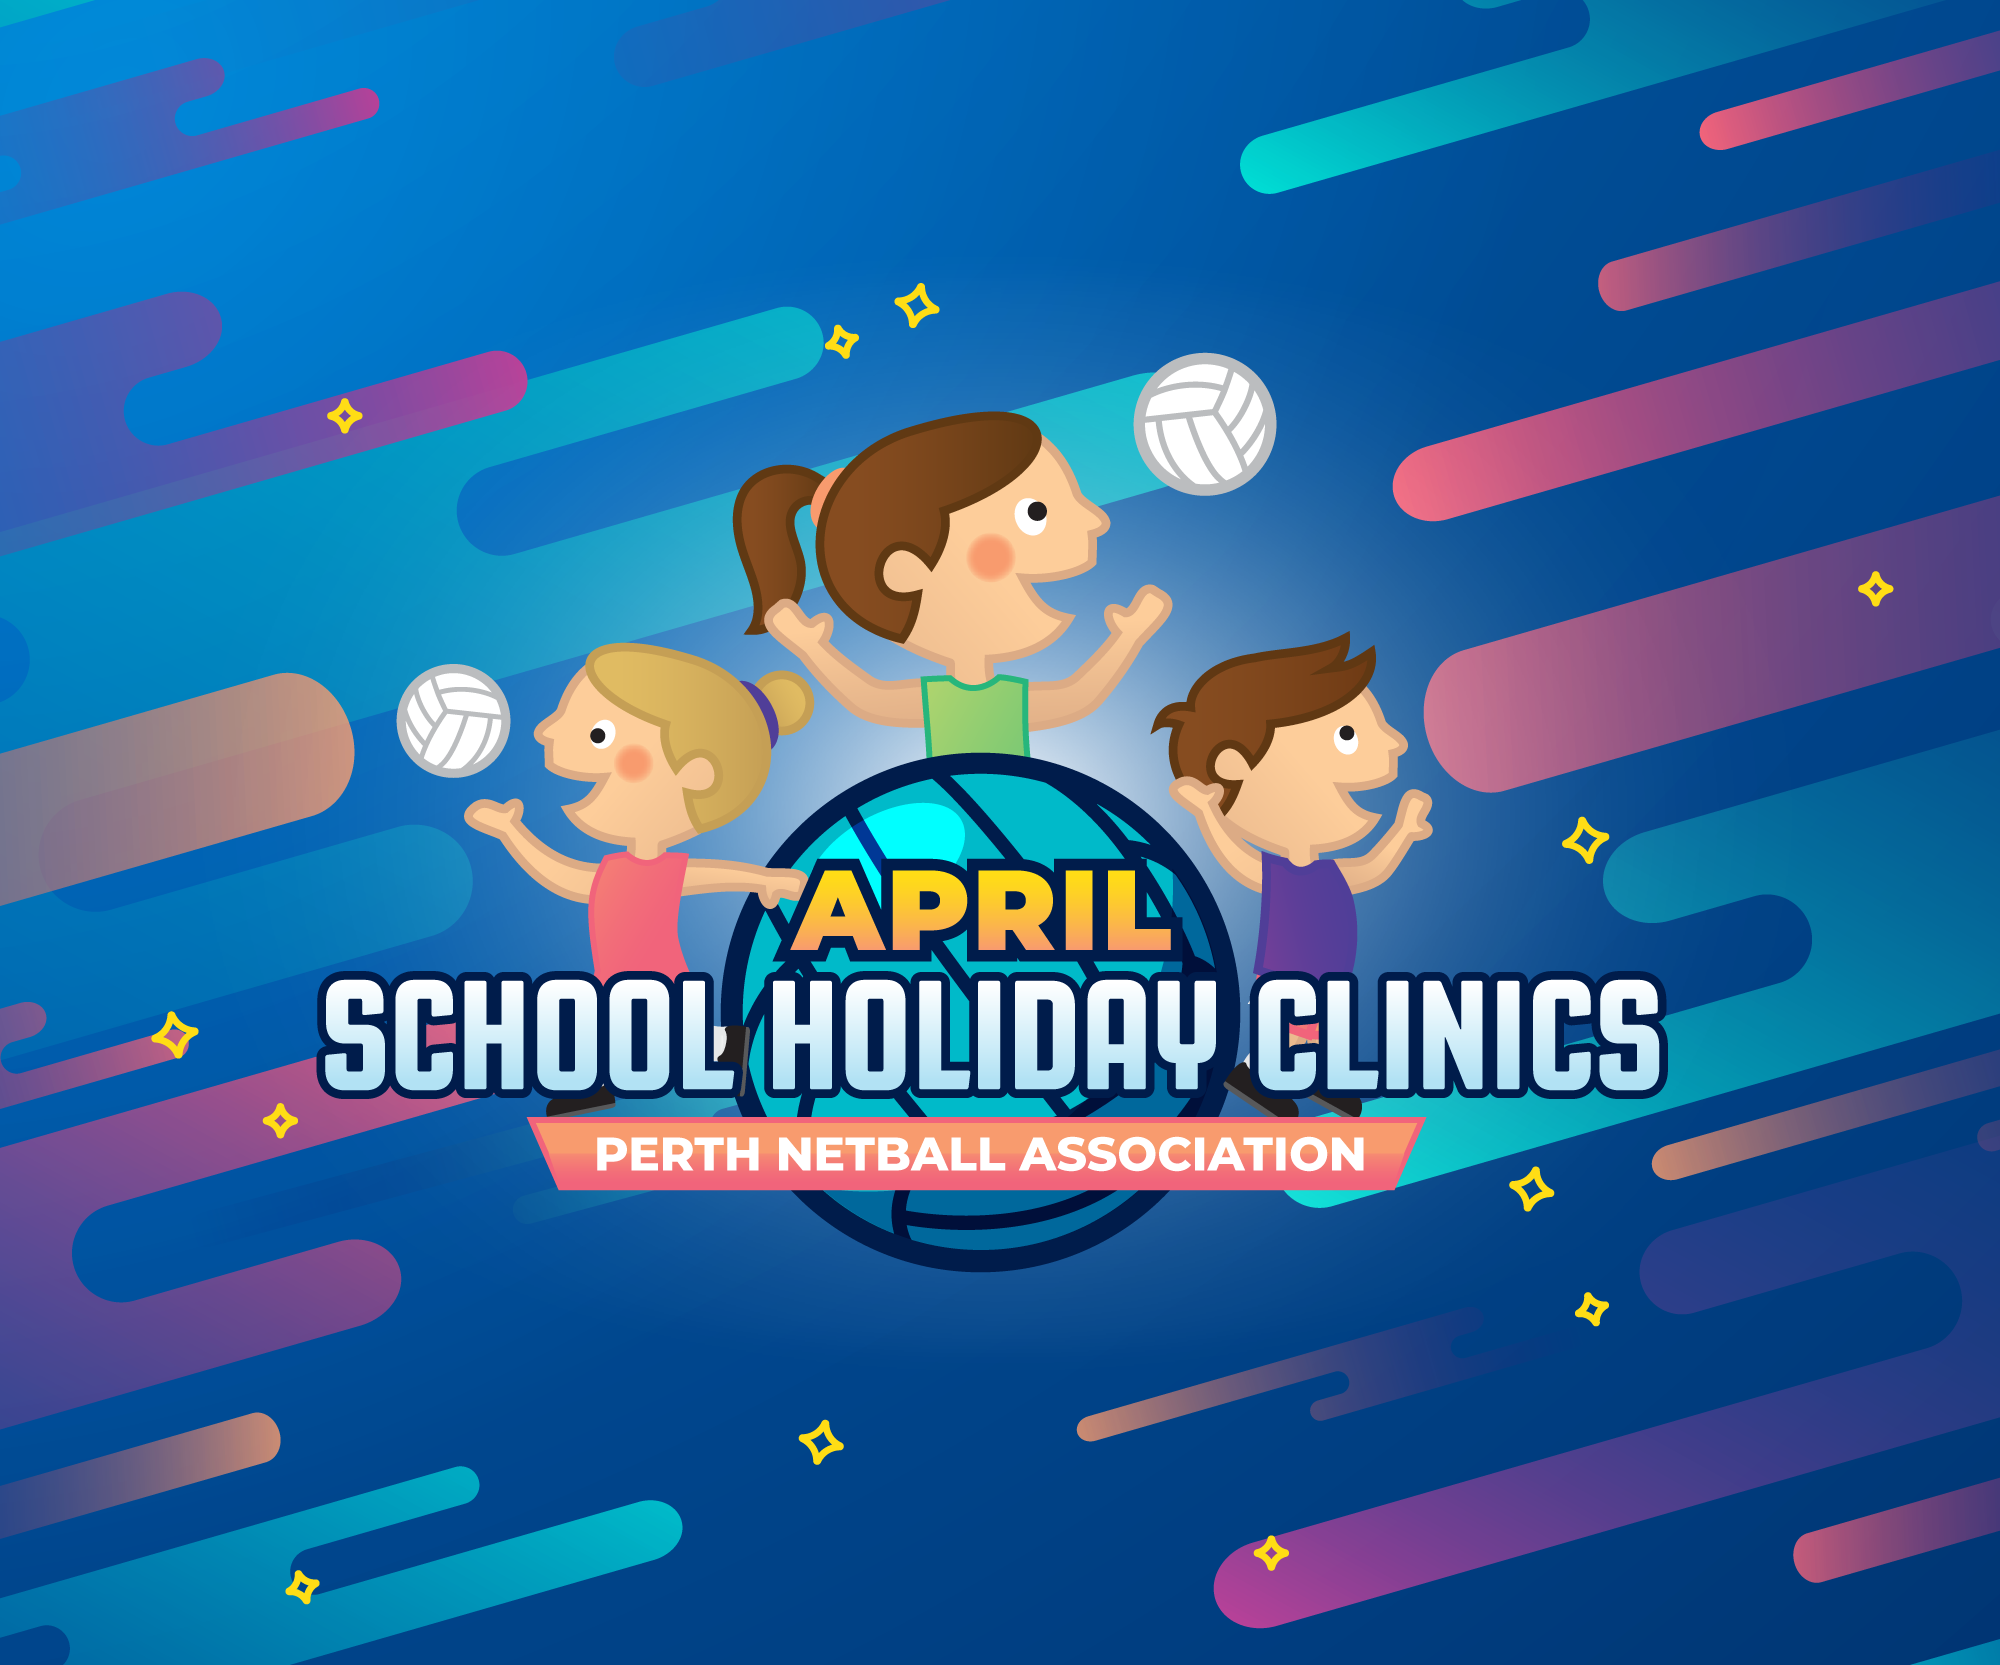 Free Packs at April School Holiday Clinics